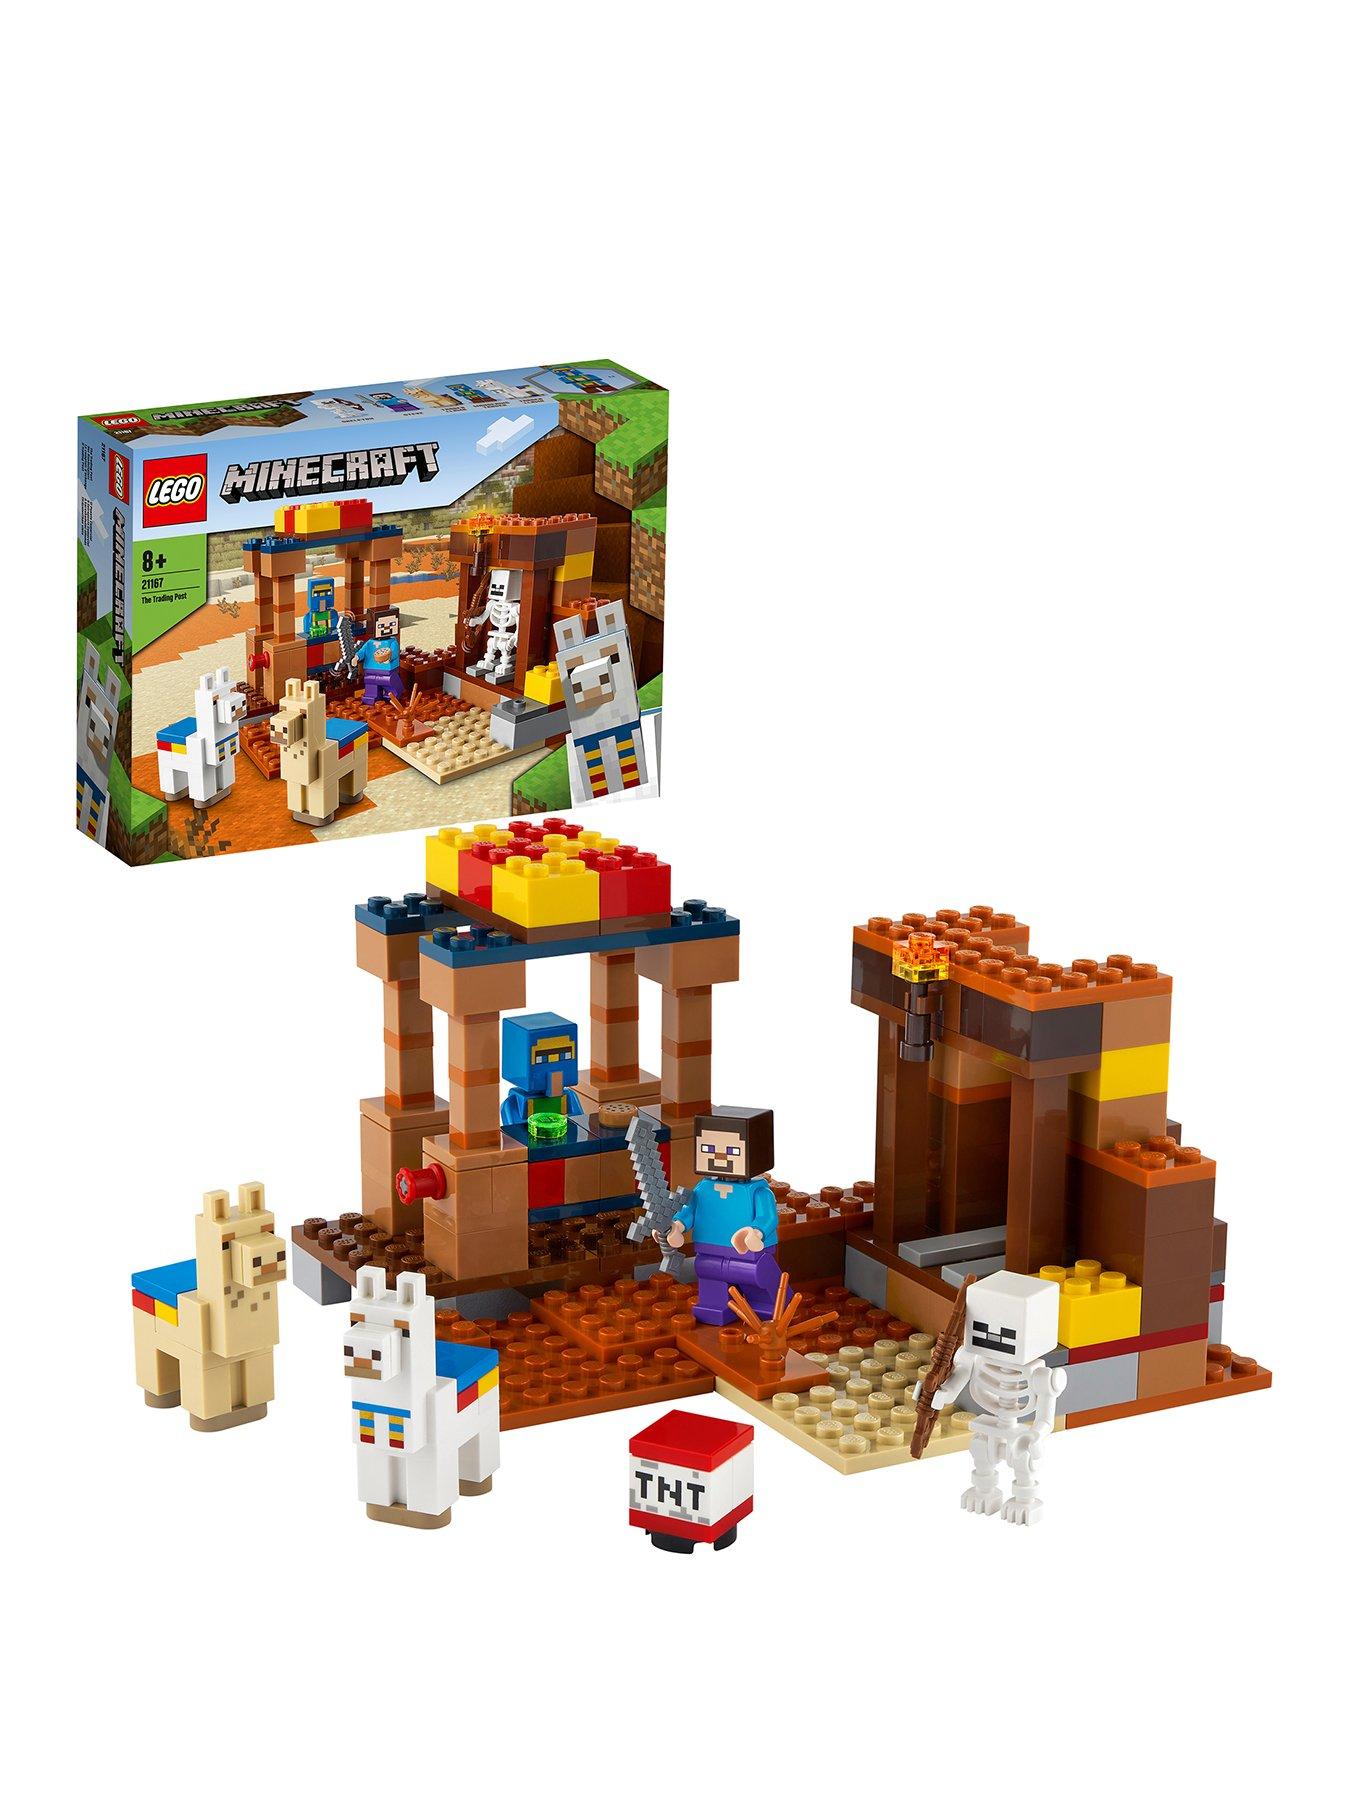 LEGO Minecraft: The Trading Post Set (21167)